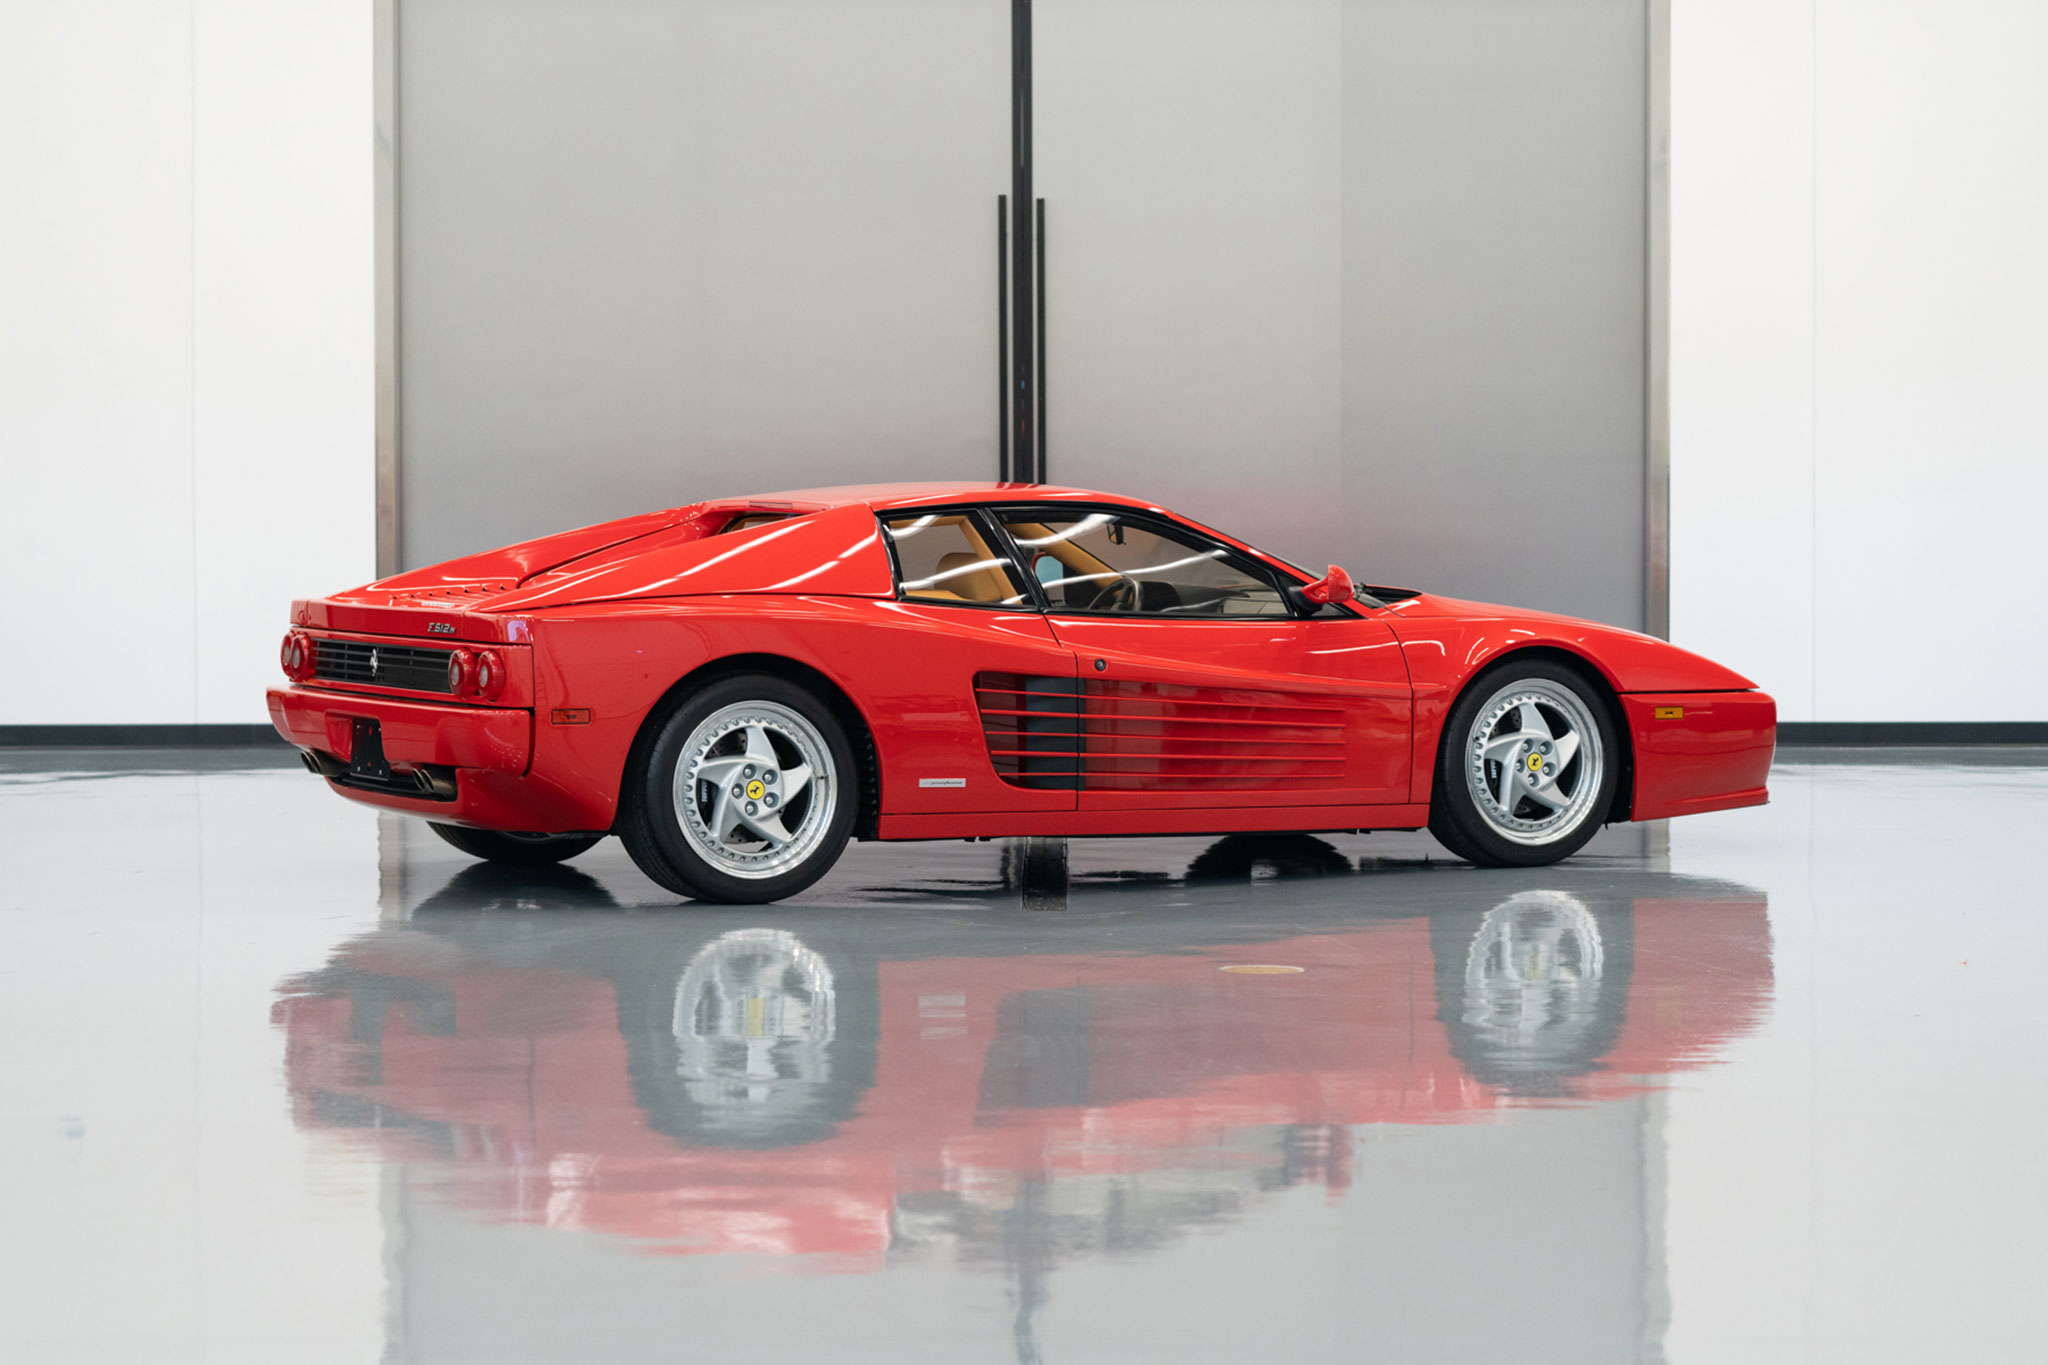 1995 Ferrari F512M - estimation $US 500 à 600 000 - Pebble Beach Gooding & Company.